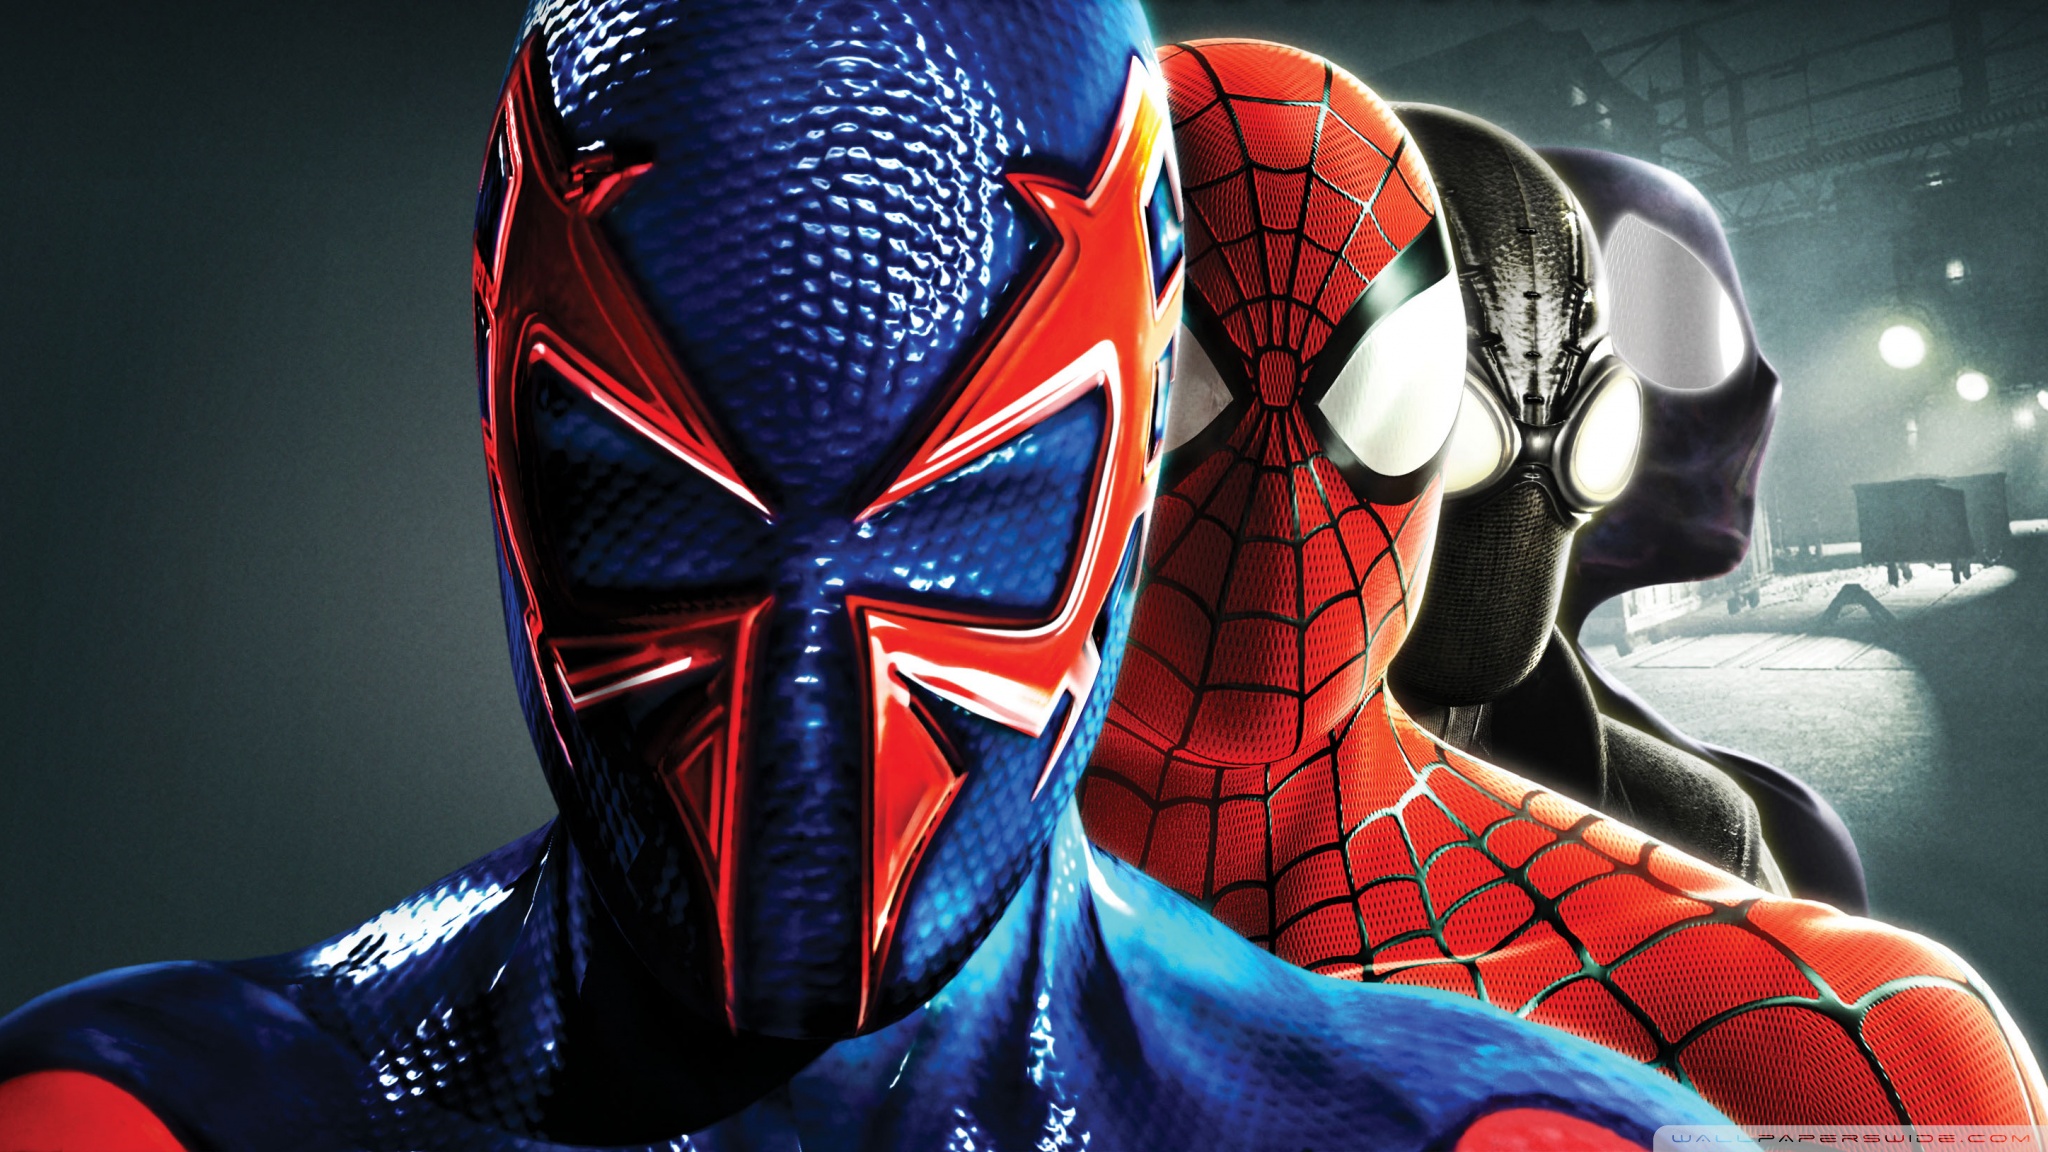 Spider Man Shattered Dimensions HD desktop wallpaper : High ...